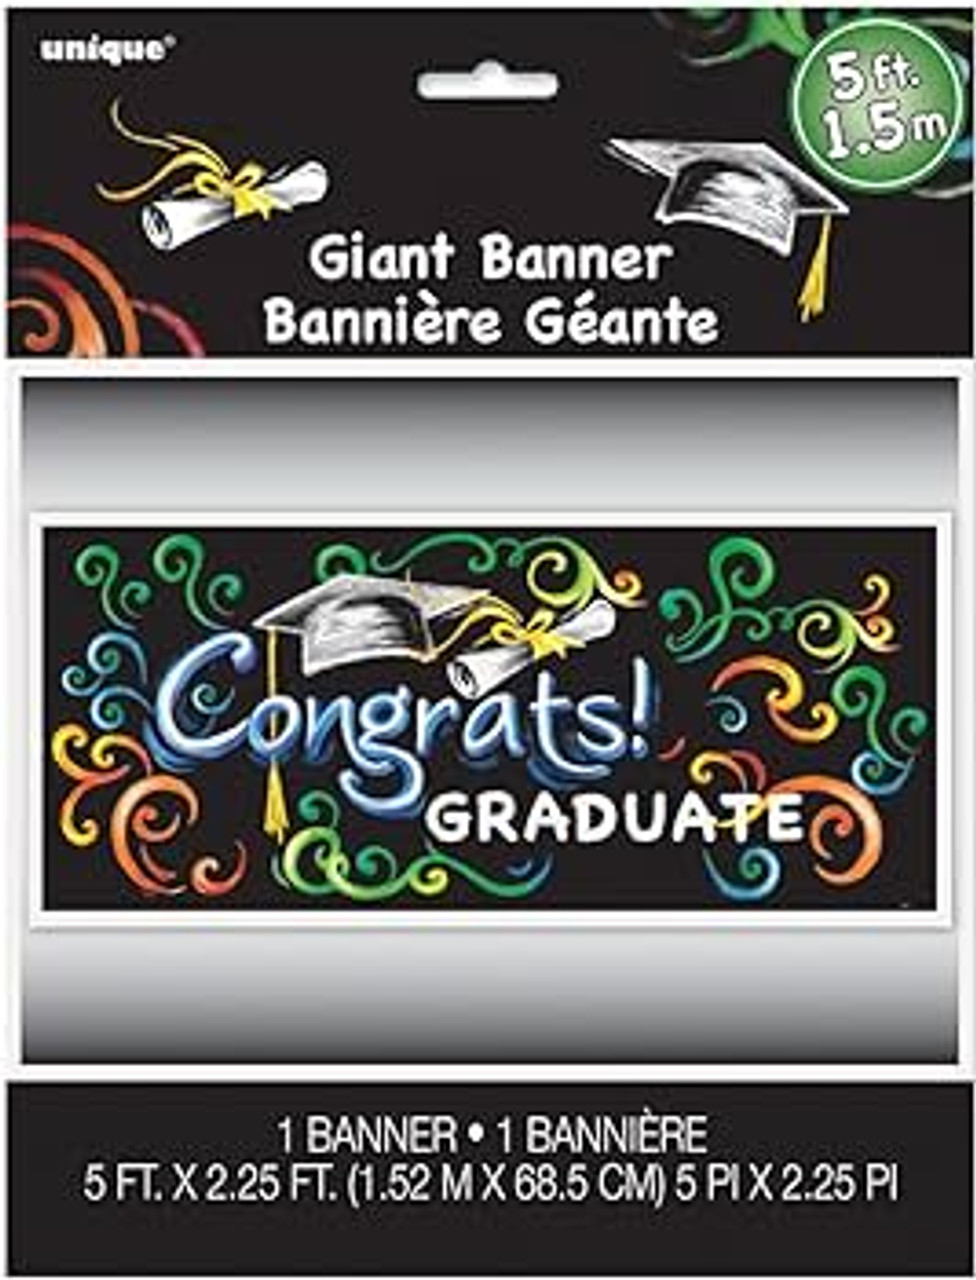 Congrats Graduate Giant Banner